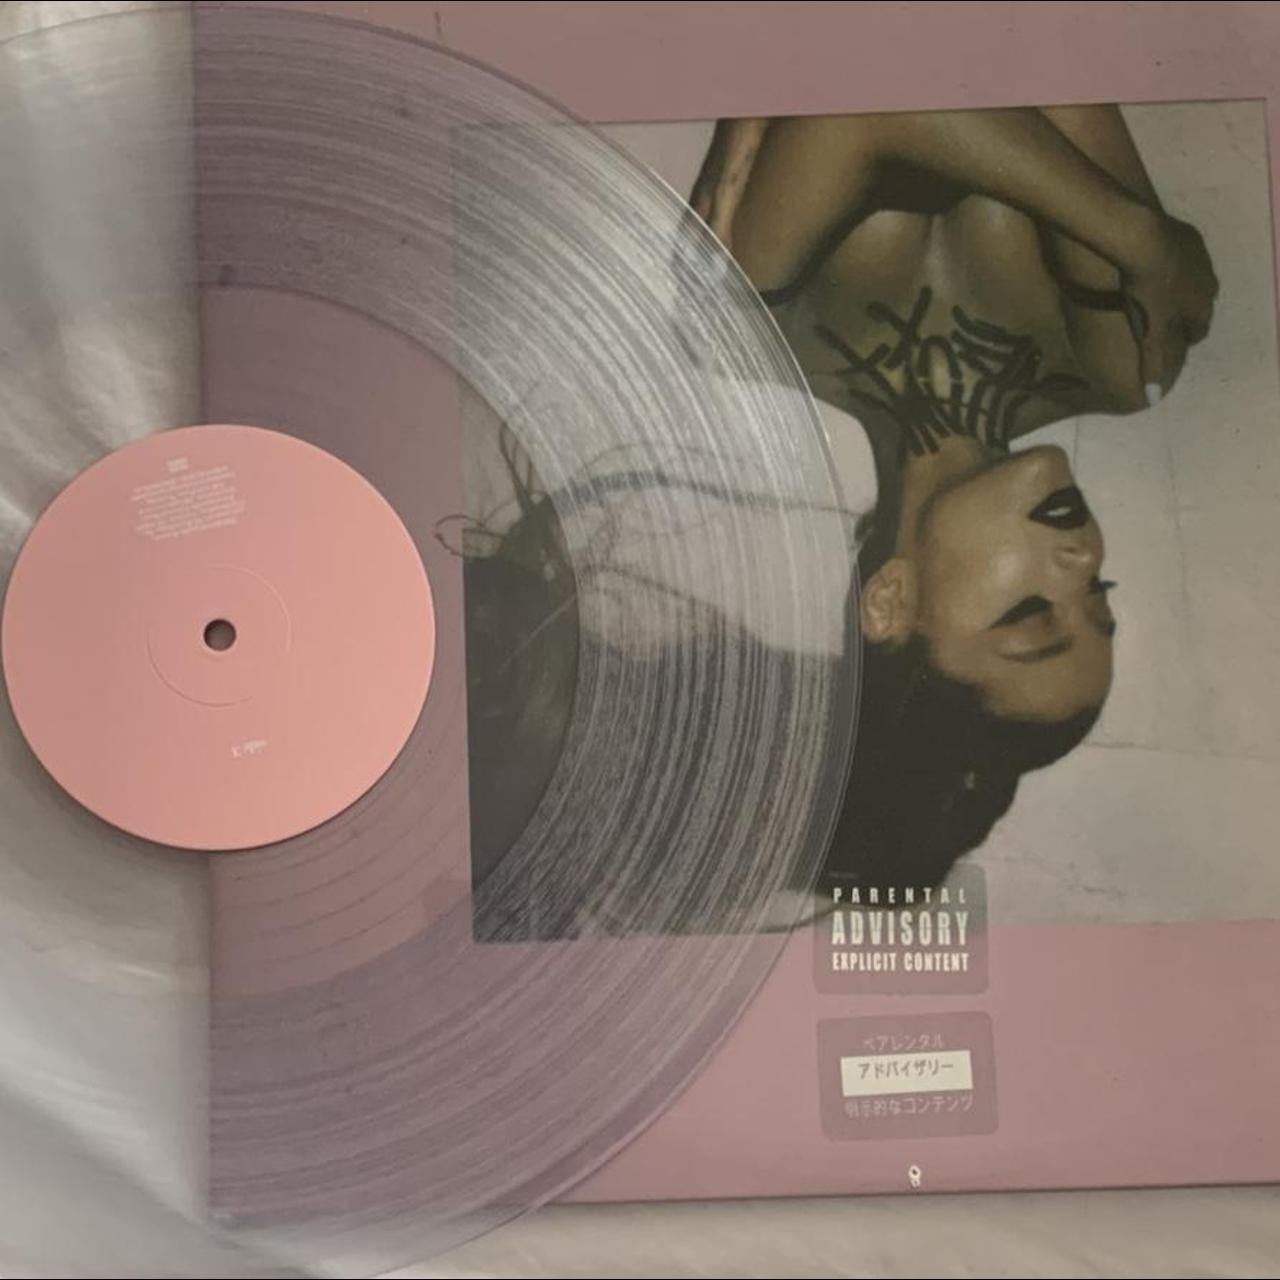 Ariana Grande - Positions Vinyl Unboxing 